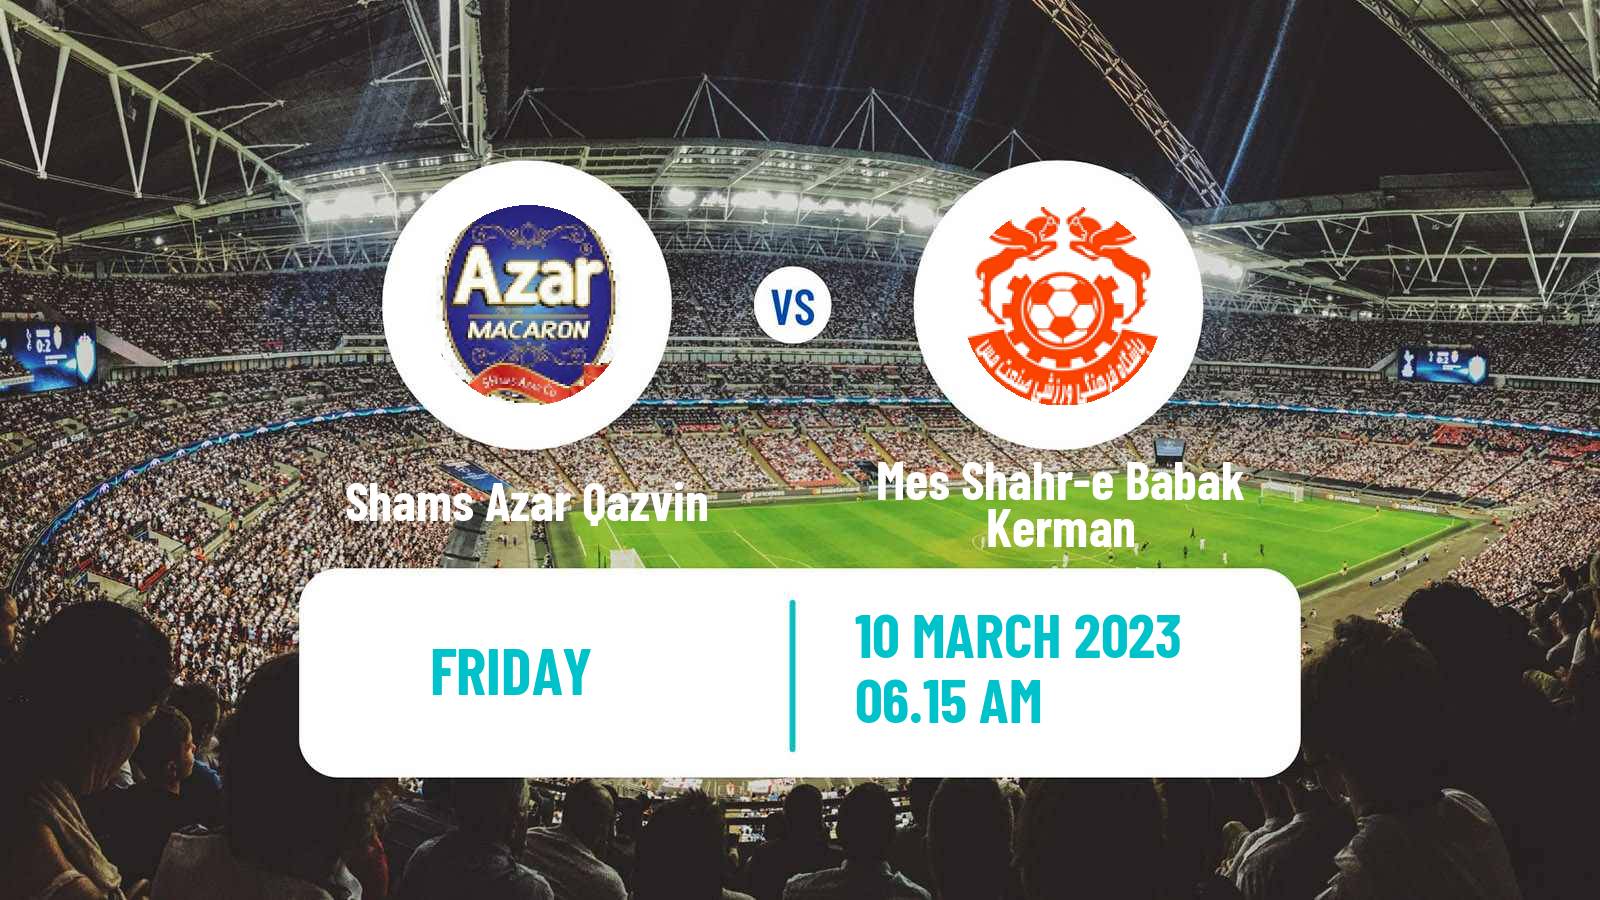 Soccer Iran Division 1 Shams Azar Qazvin - Mes Shahr-e Babak Kerman